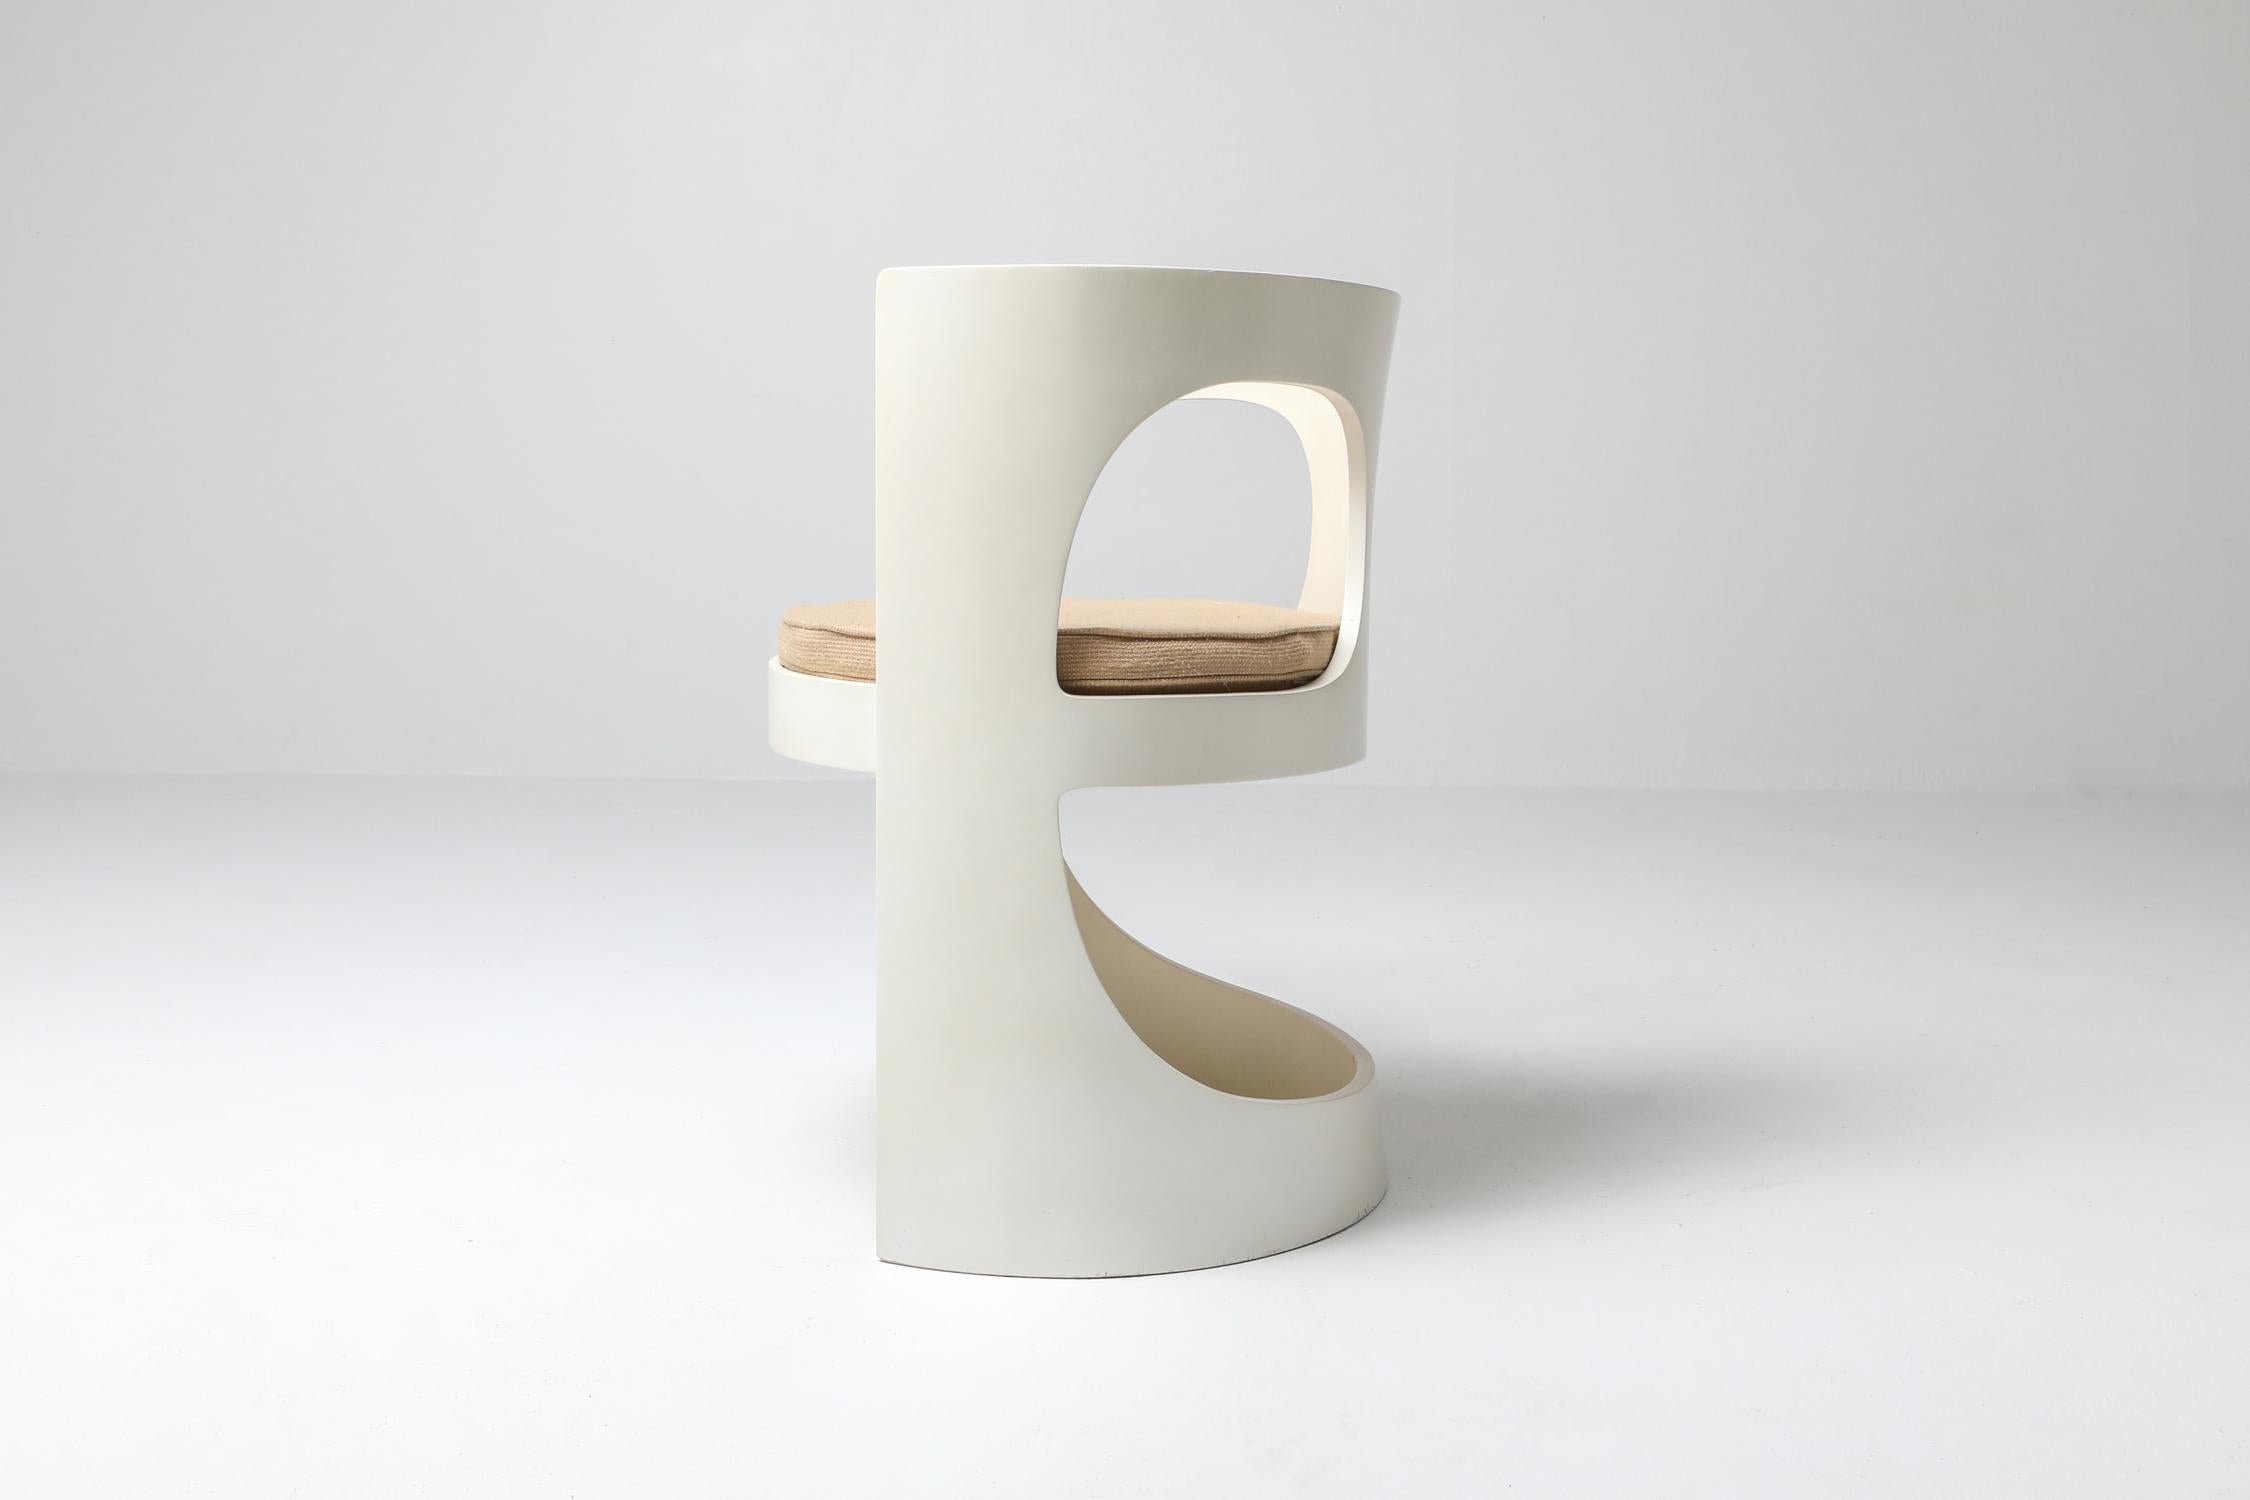 Asko 'Prepop' Dining Chairs by Arne Jacobsen 1